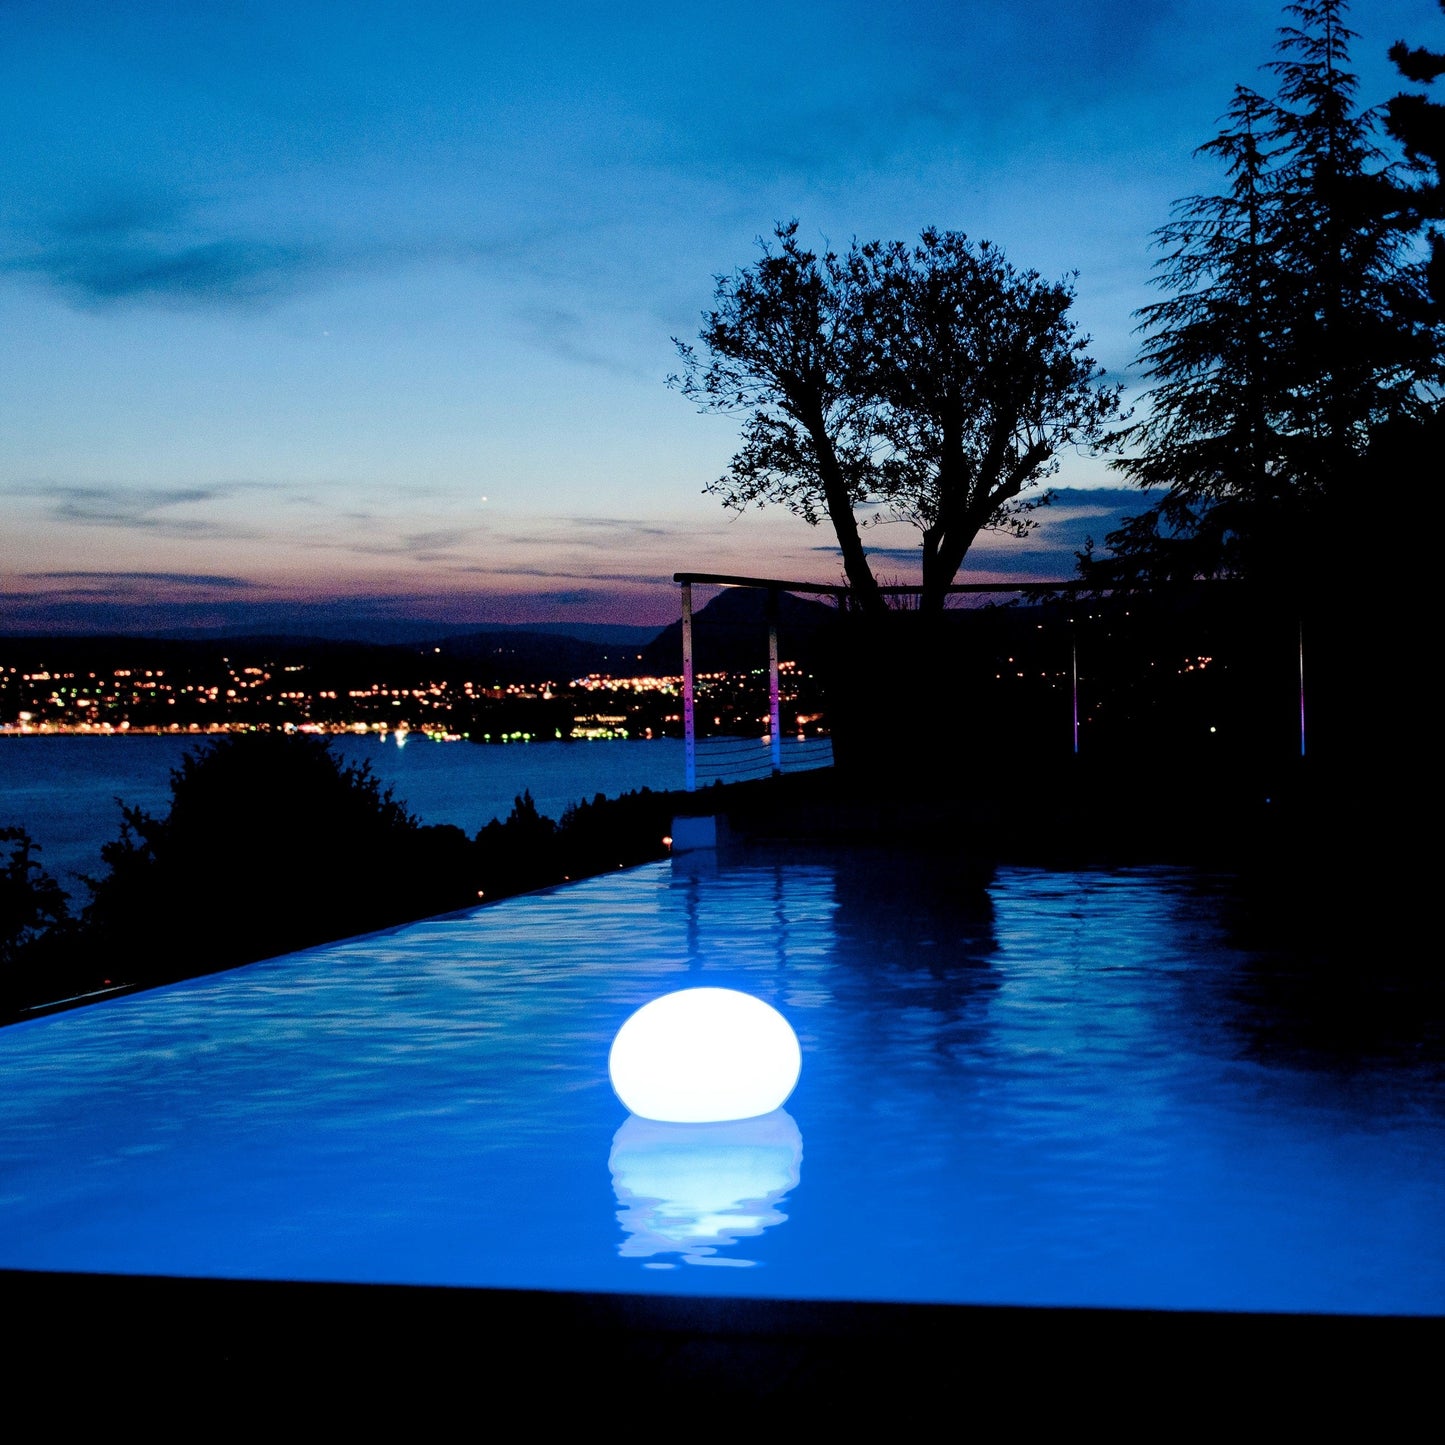 Flatball Outdoor Bluetooth LED Lamp